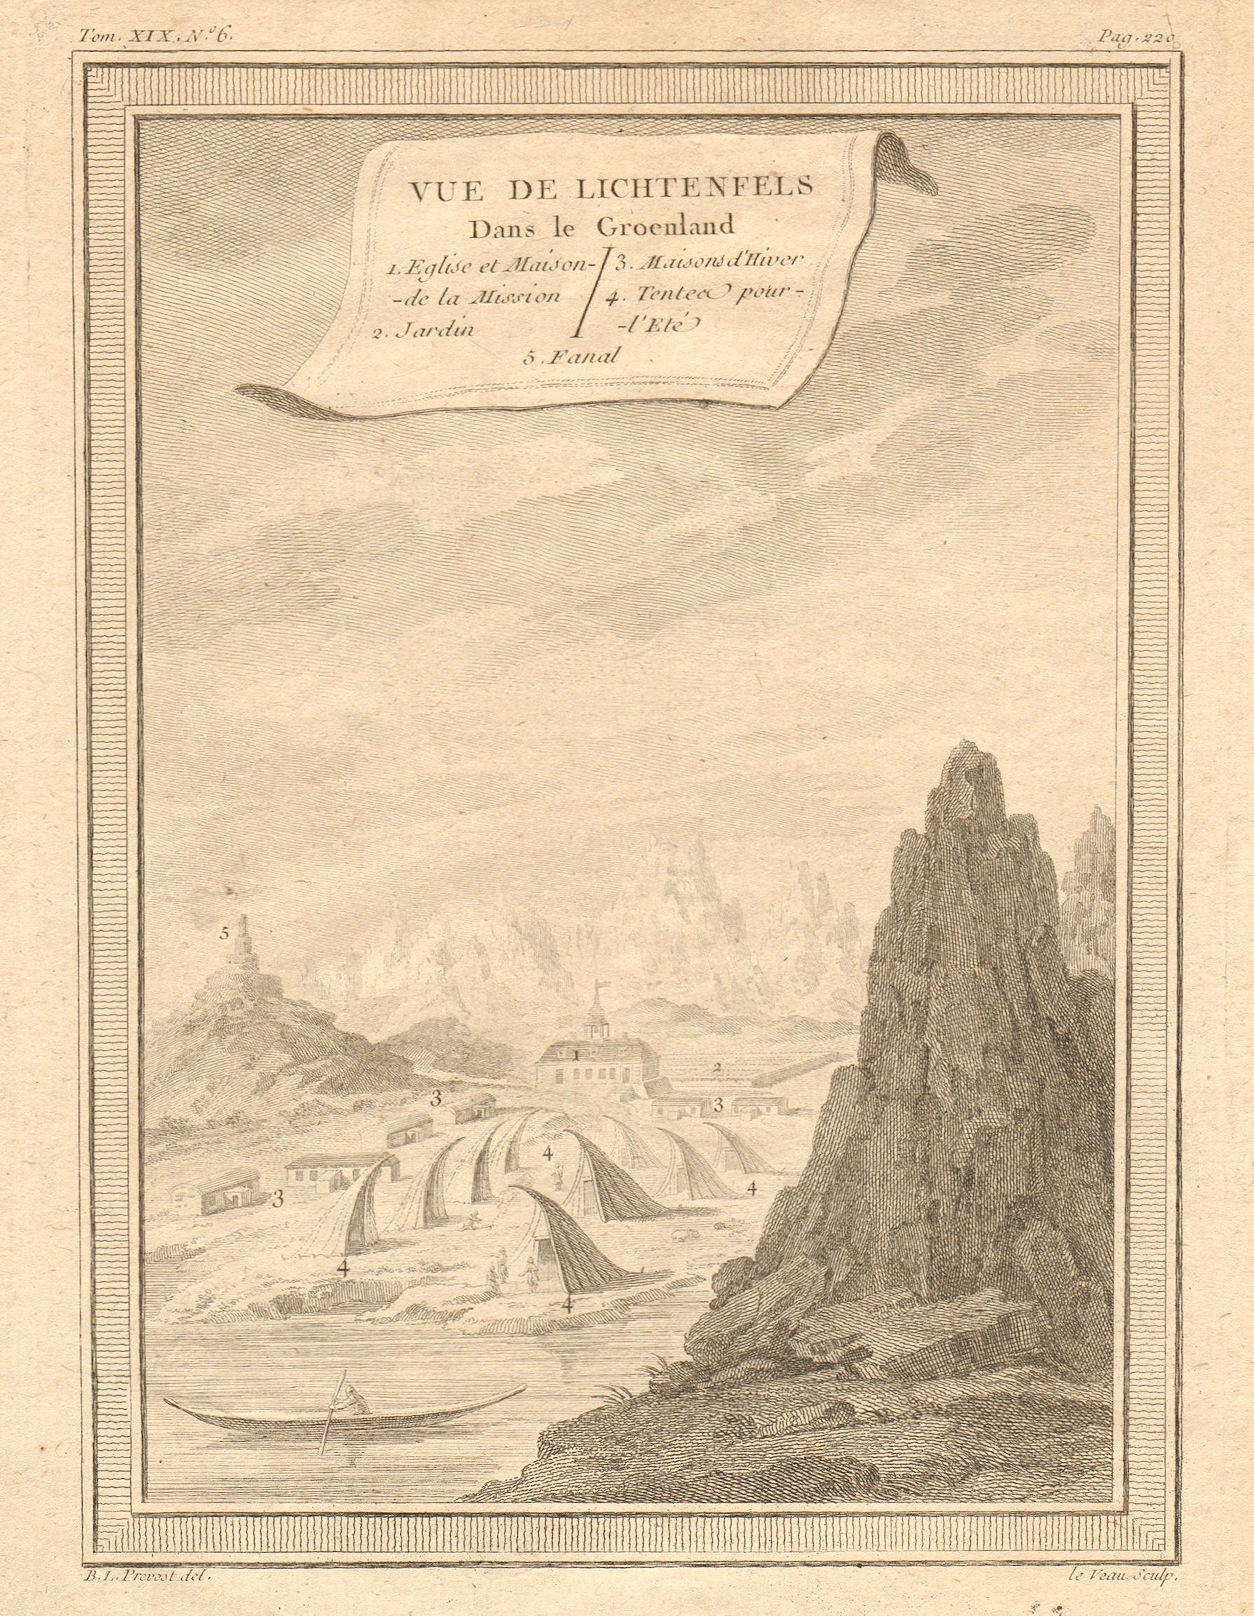 Associate Product 'Vue de Lichtenfels dans le Groenland'. View of Akunnat, Greenland 1770 print